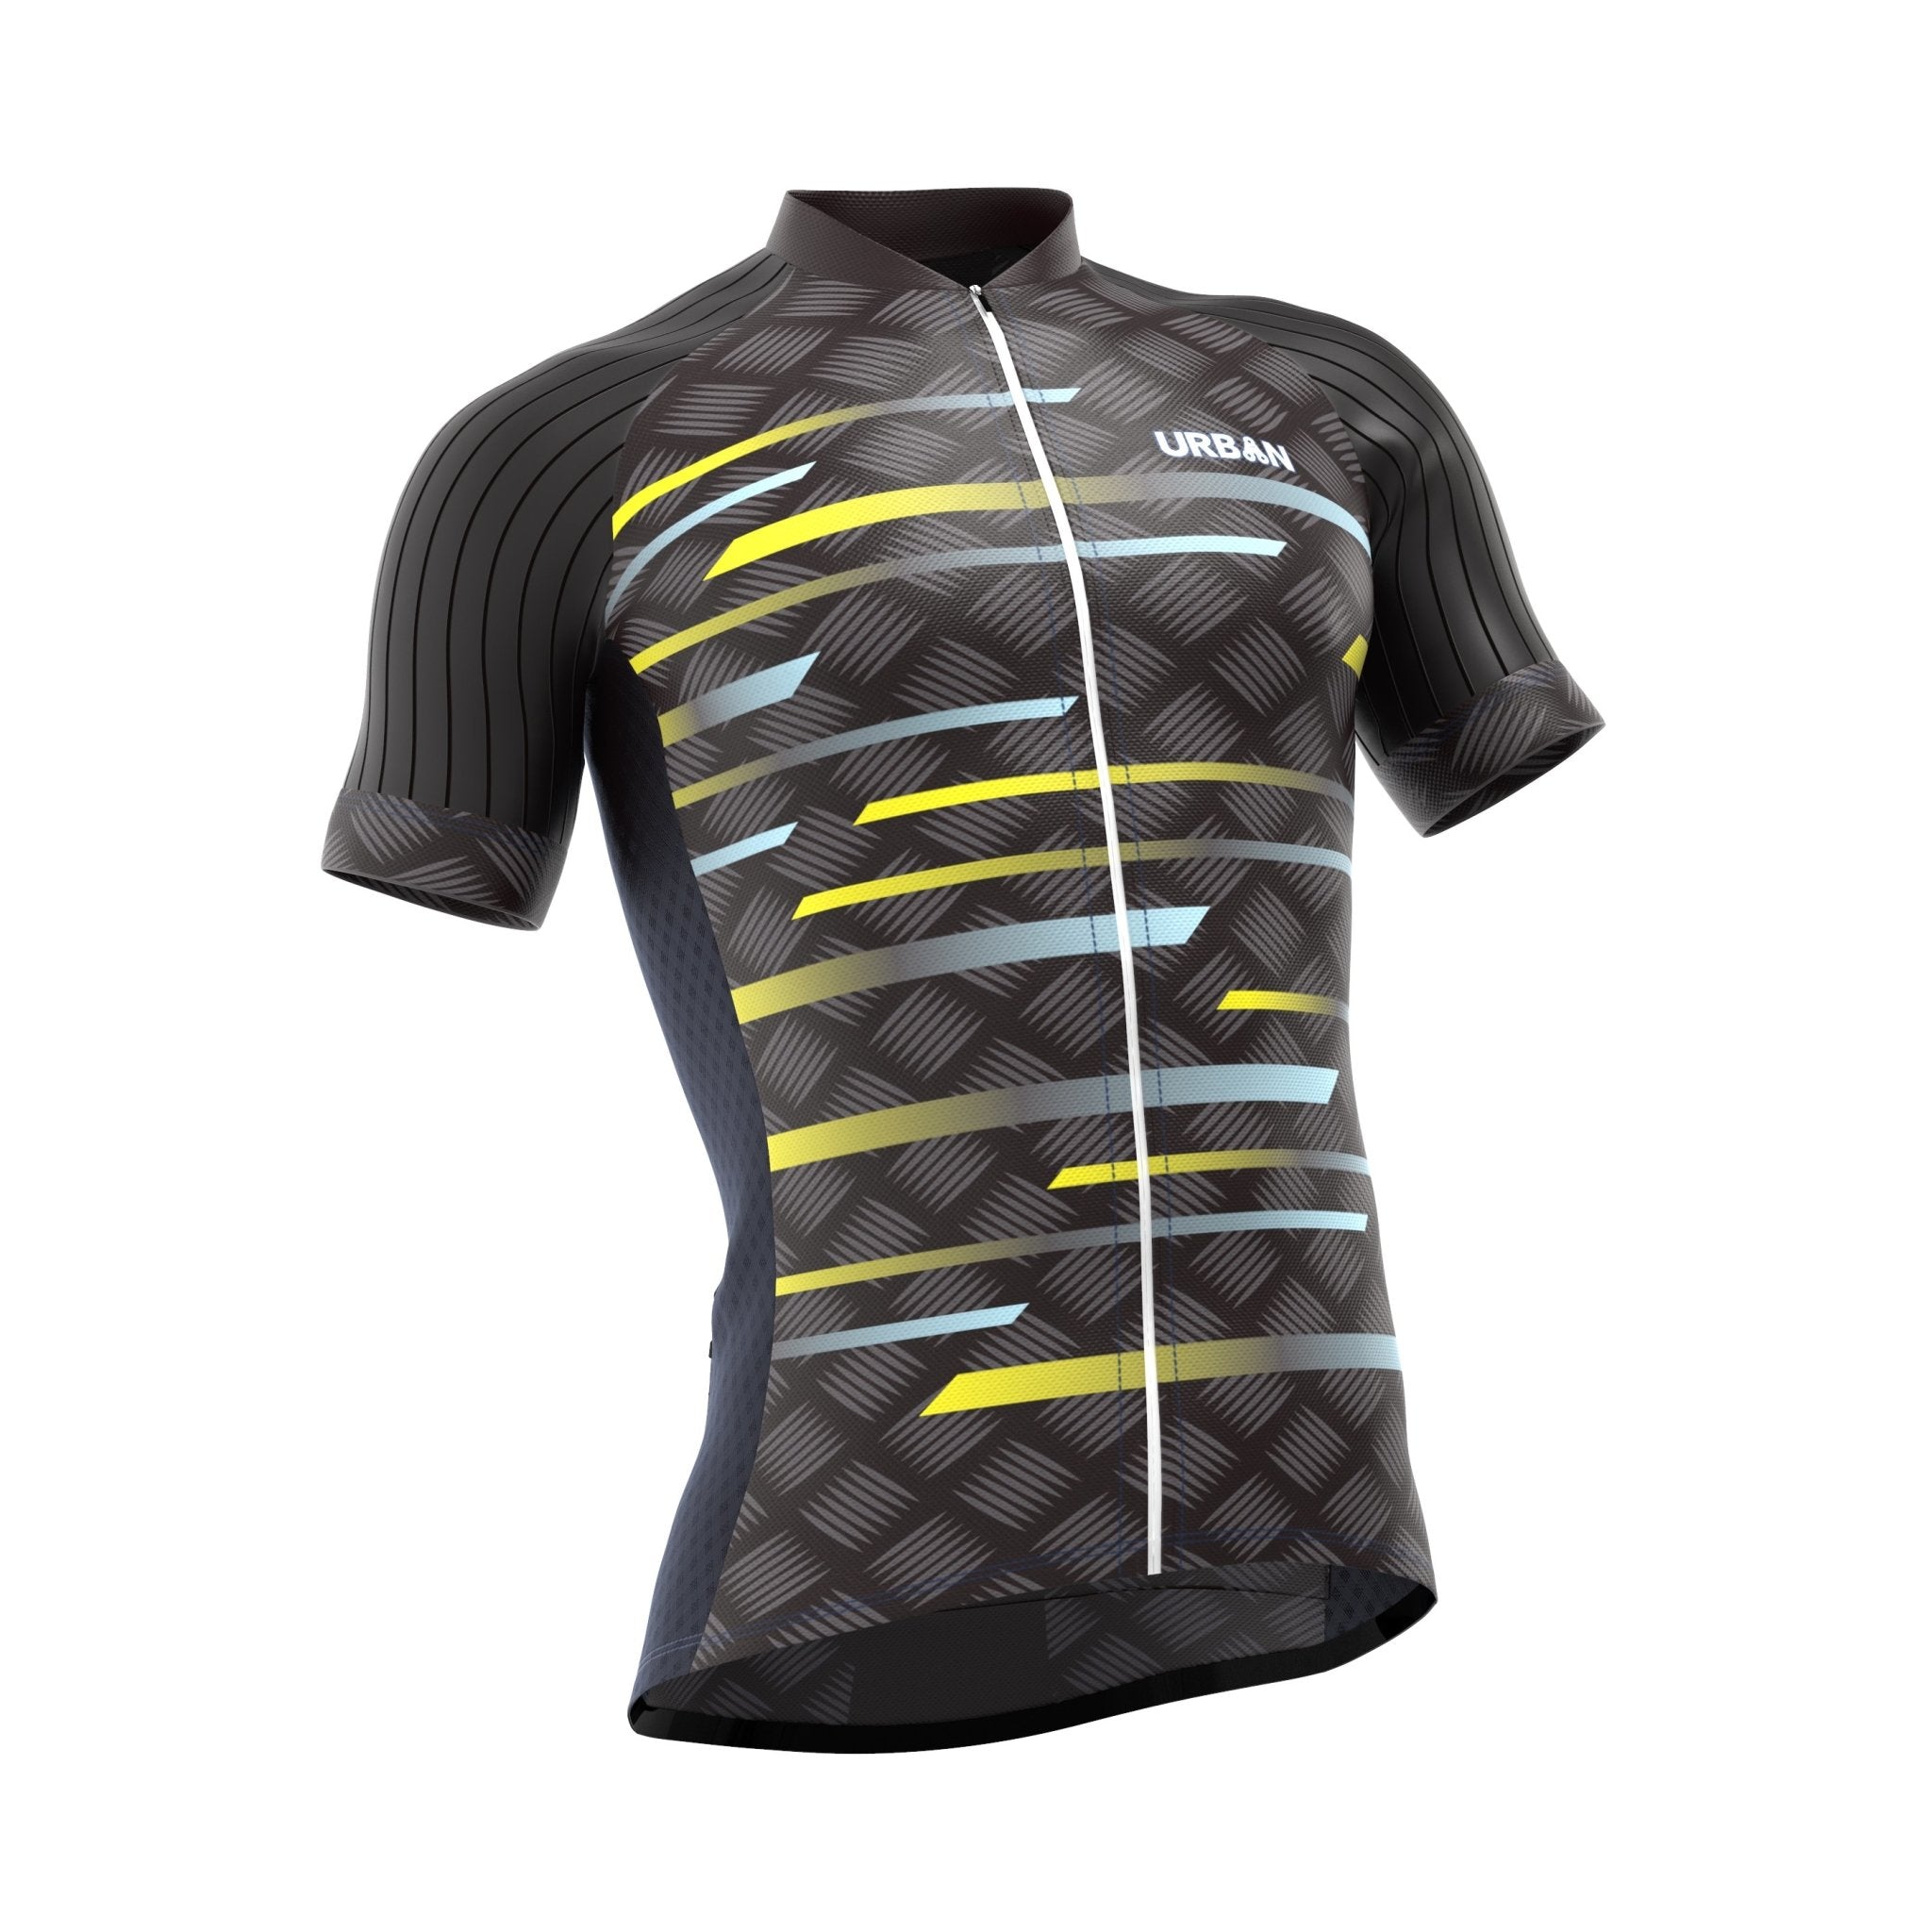 Giro Chrono Elite Short Sleeve Jersey review - Jerseys - Clothing